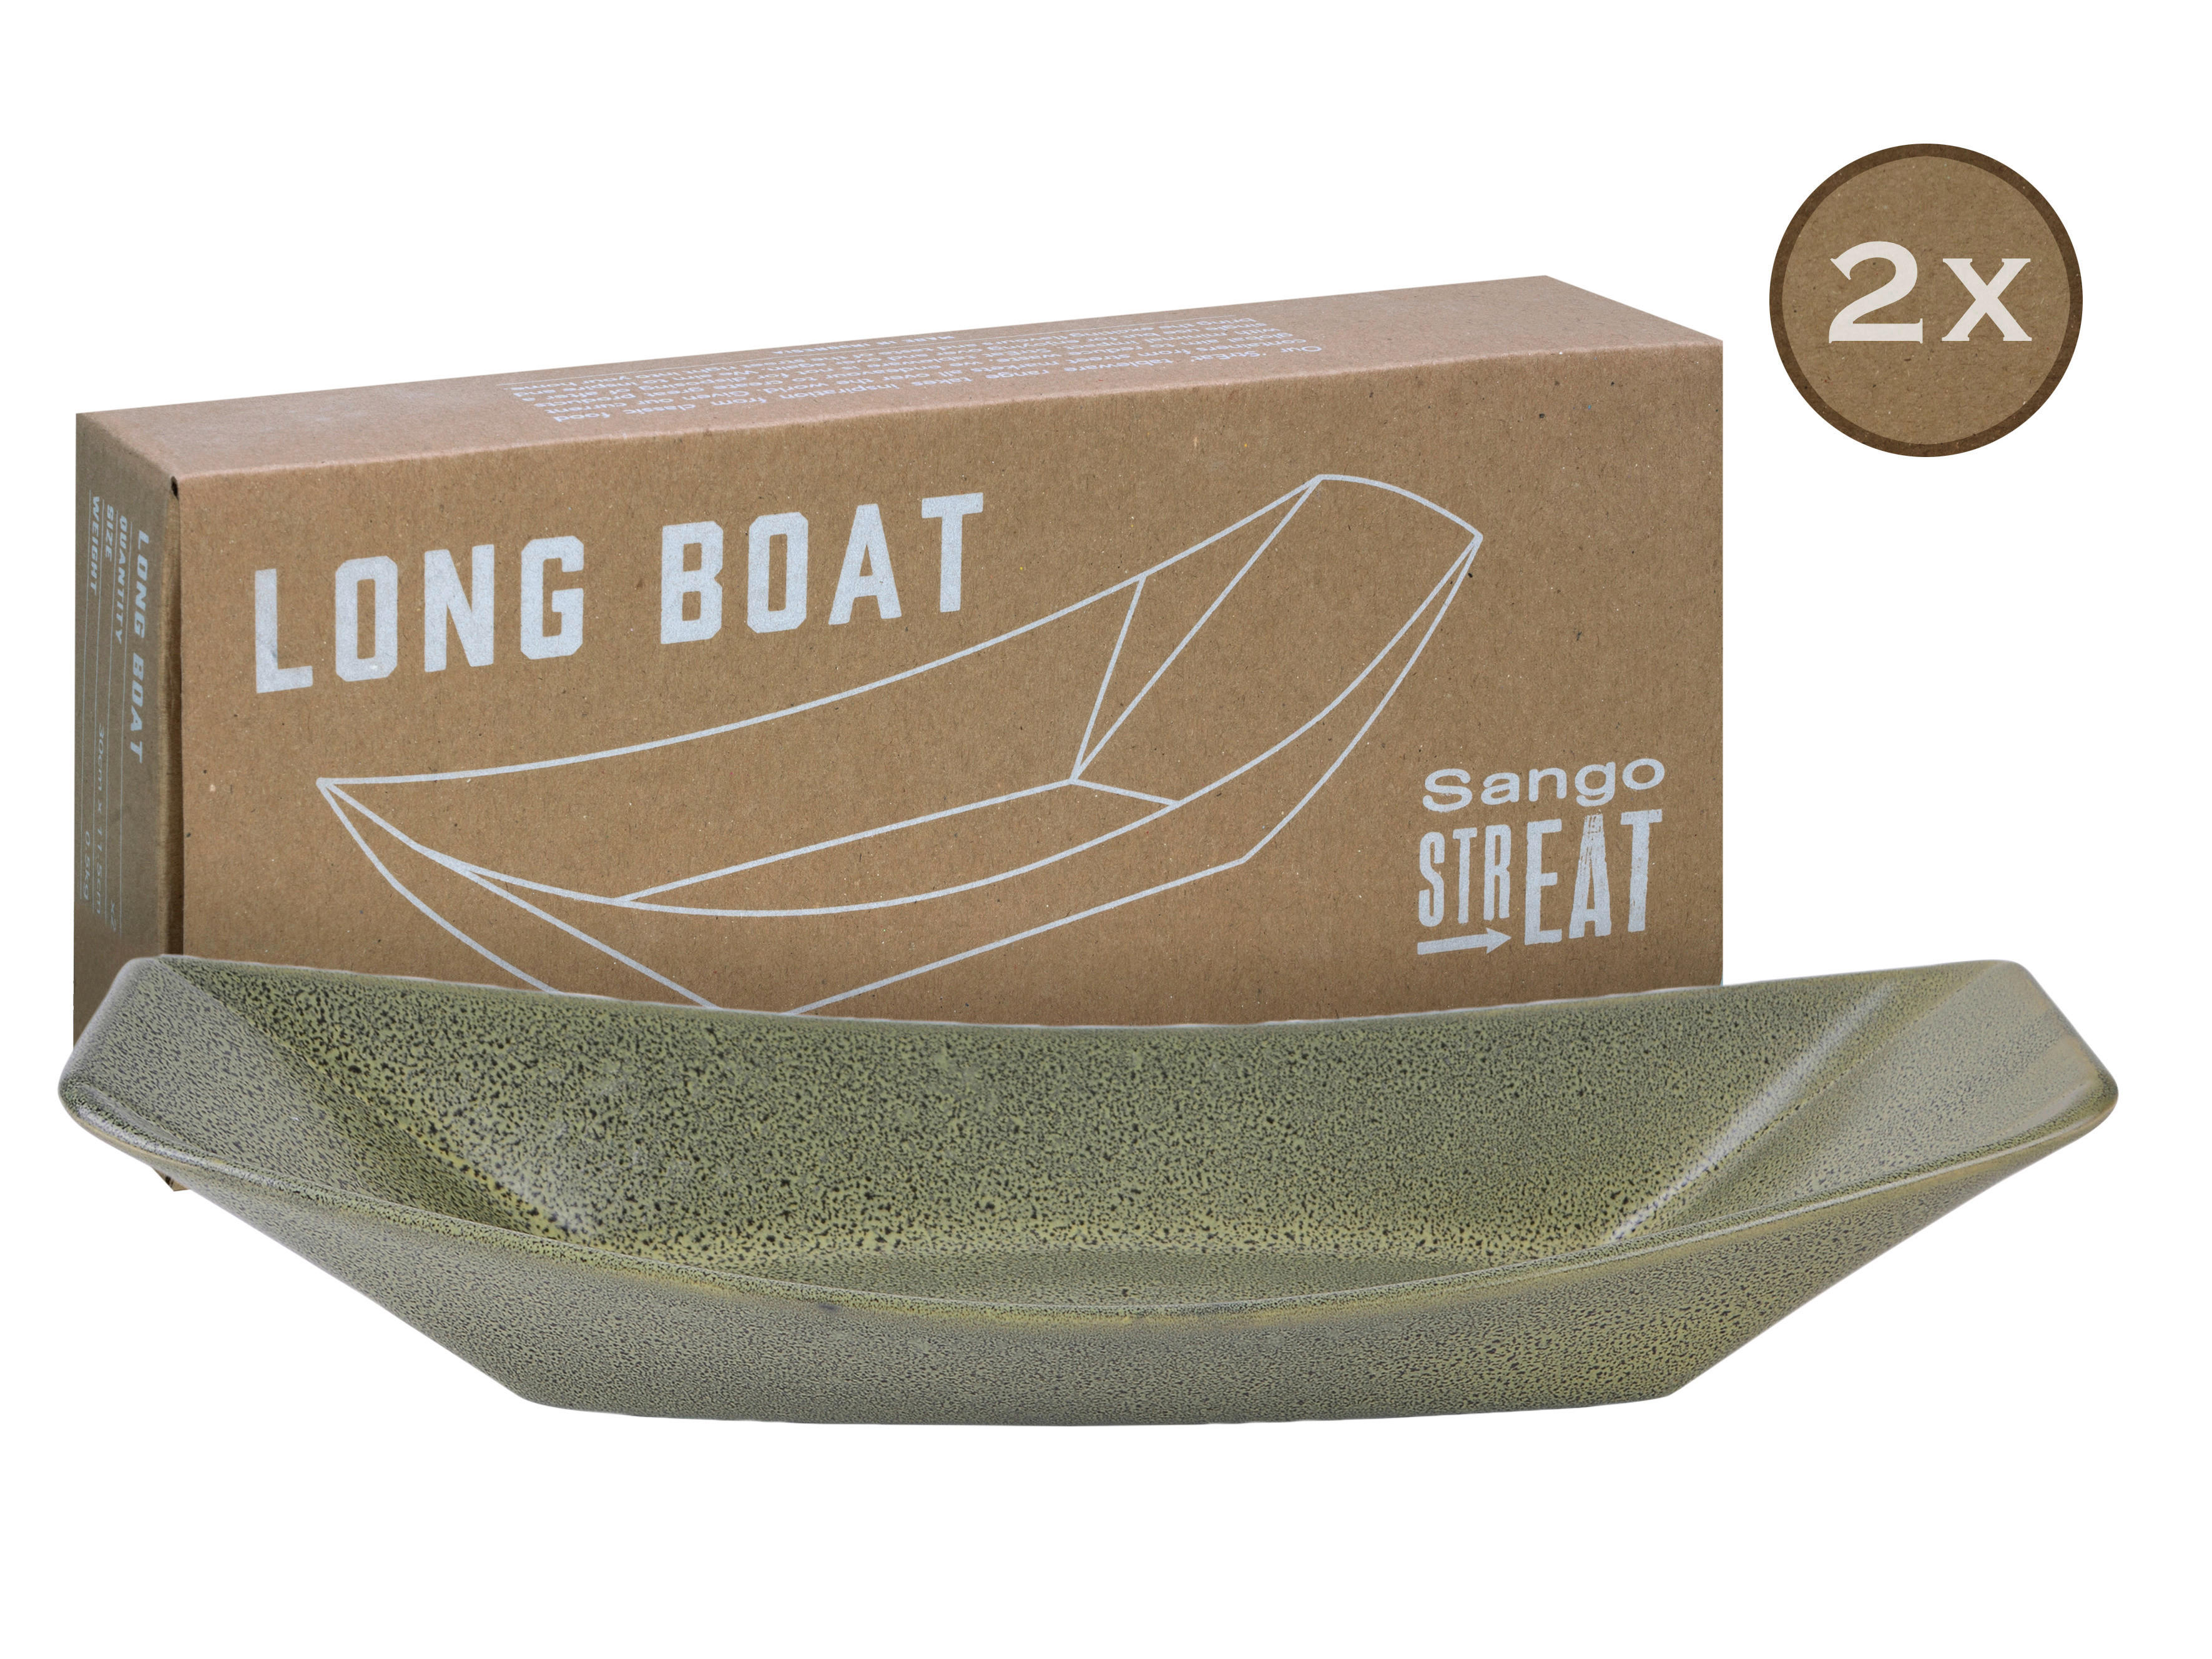 CreaTable Servierset Streat Boat long grün Steinzeug